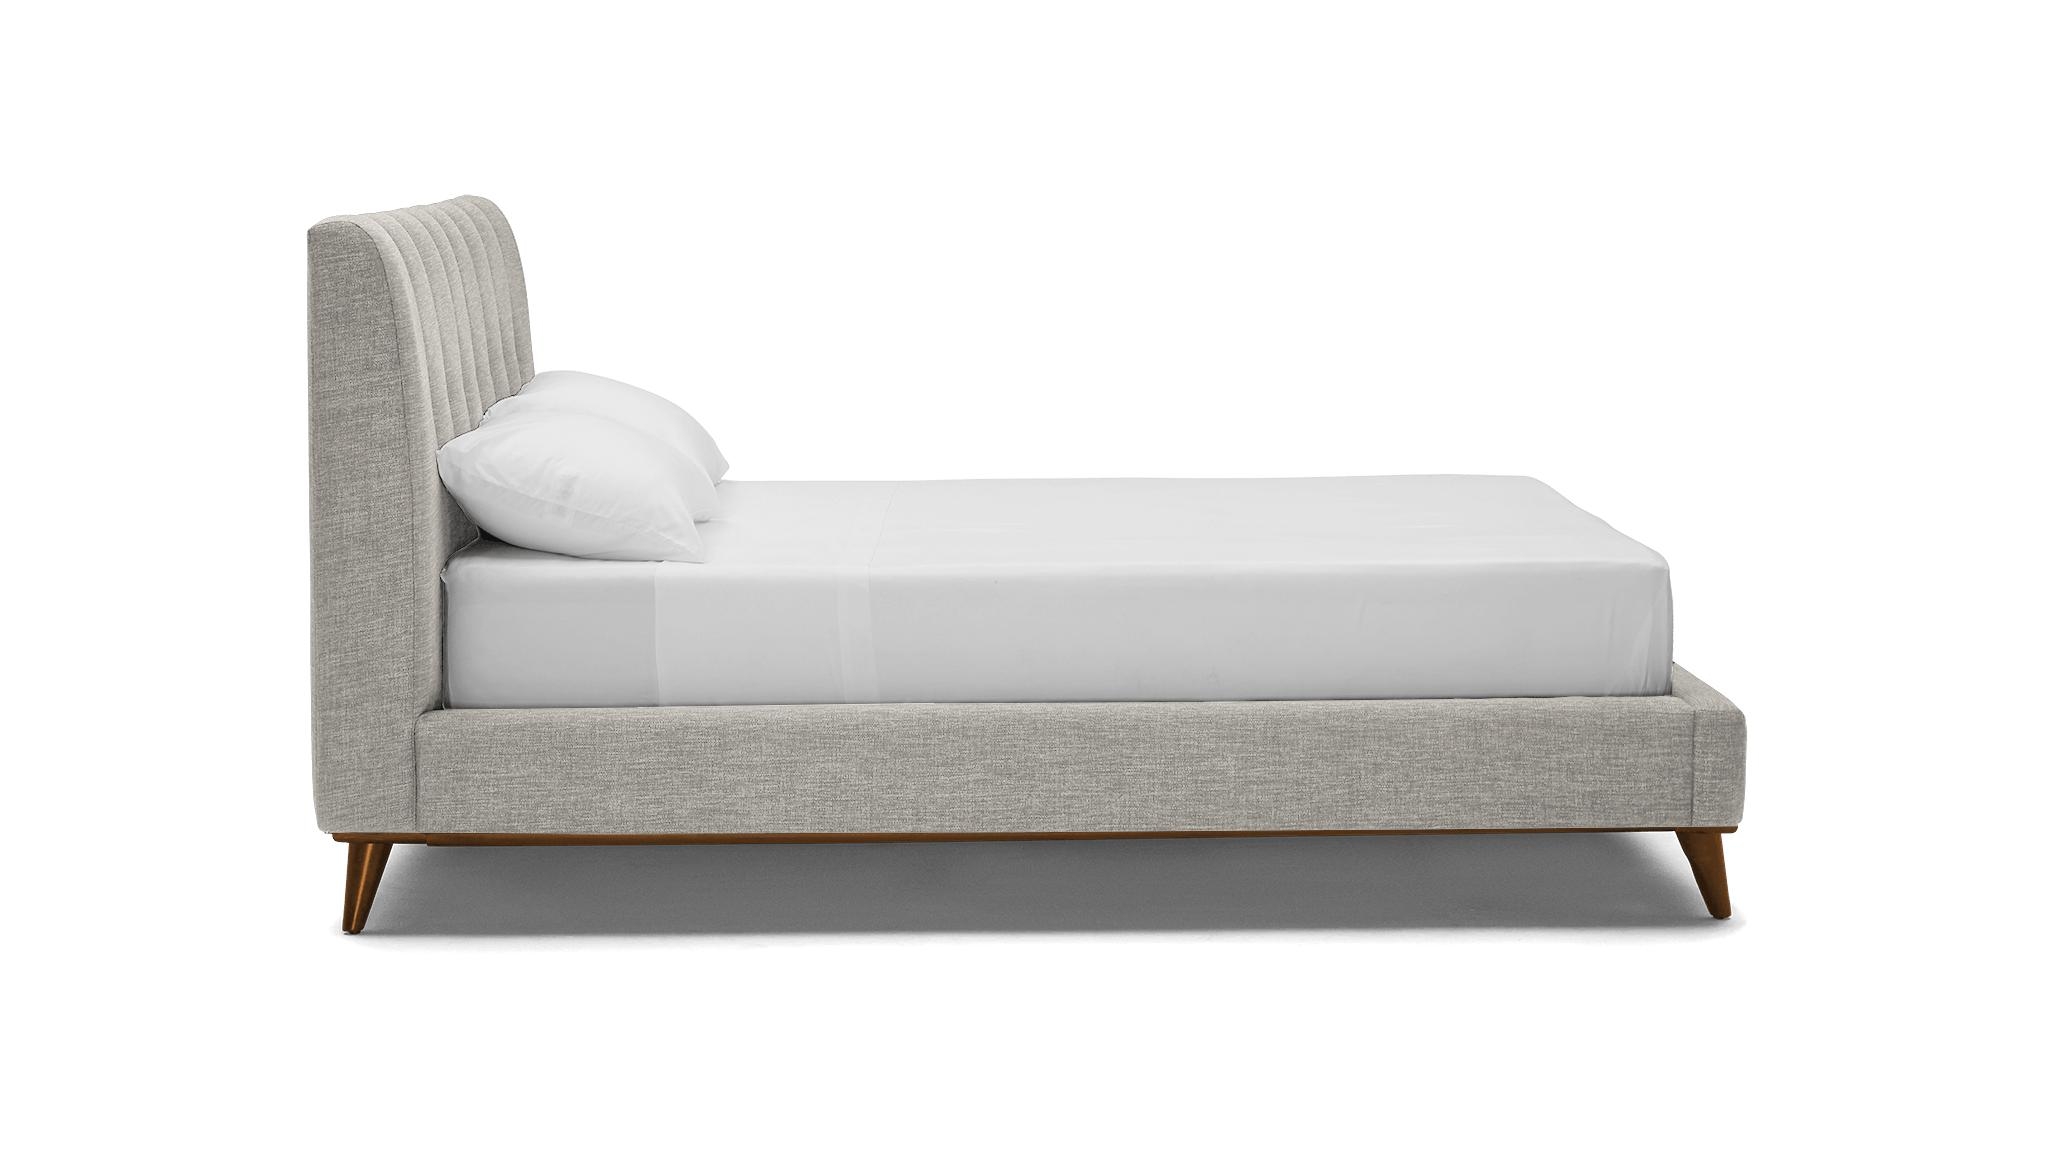 Gray Hughes Mid Century Modern Bed - Bloke Cotton - Mocha - Eastern King - Image 2